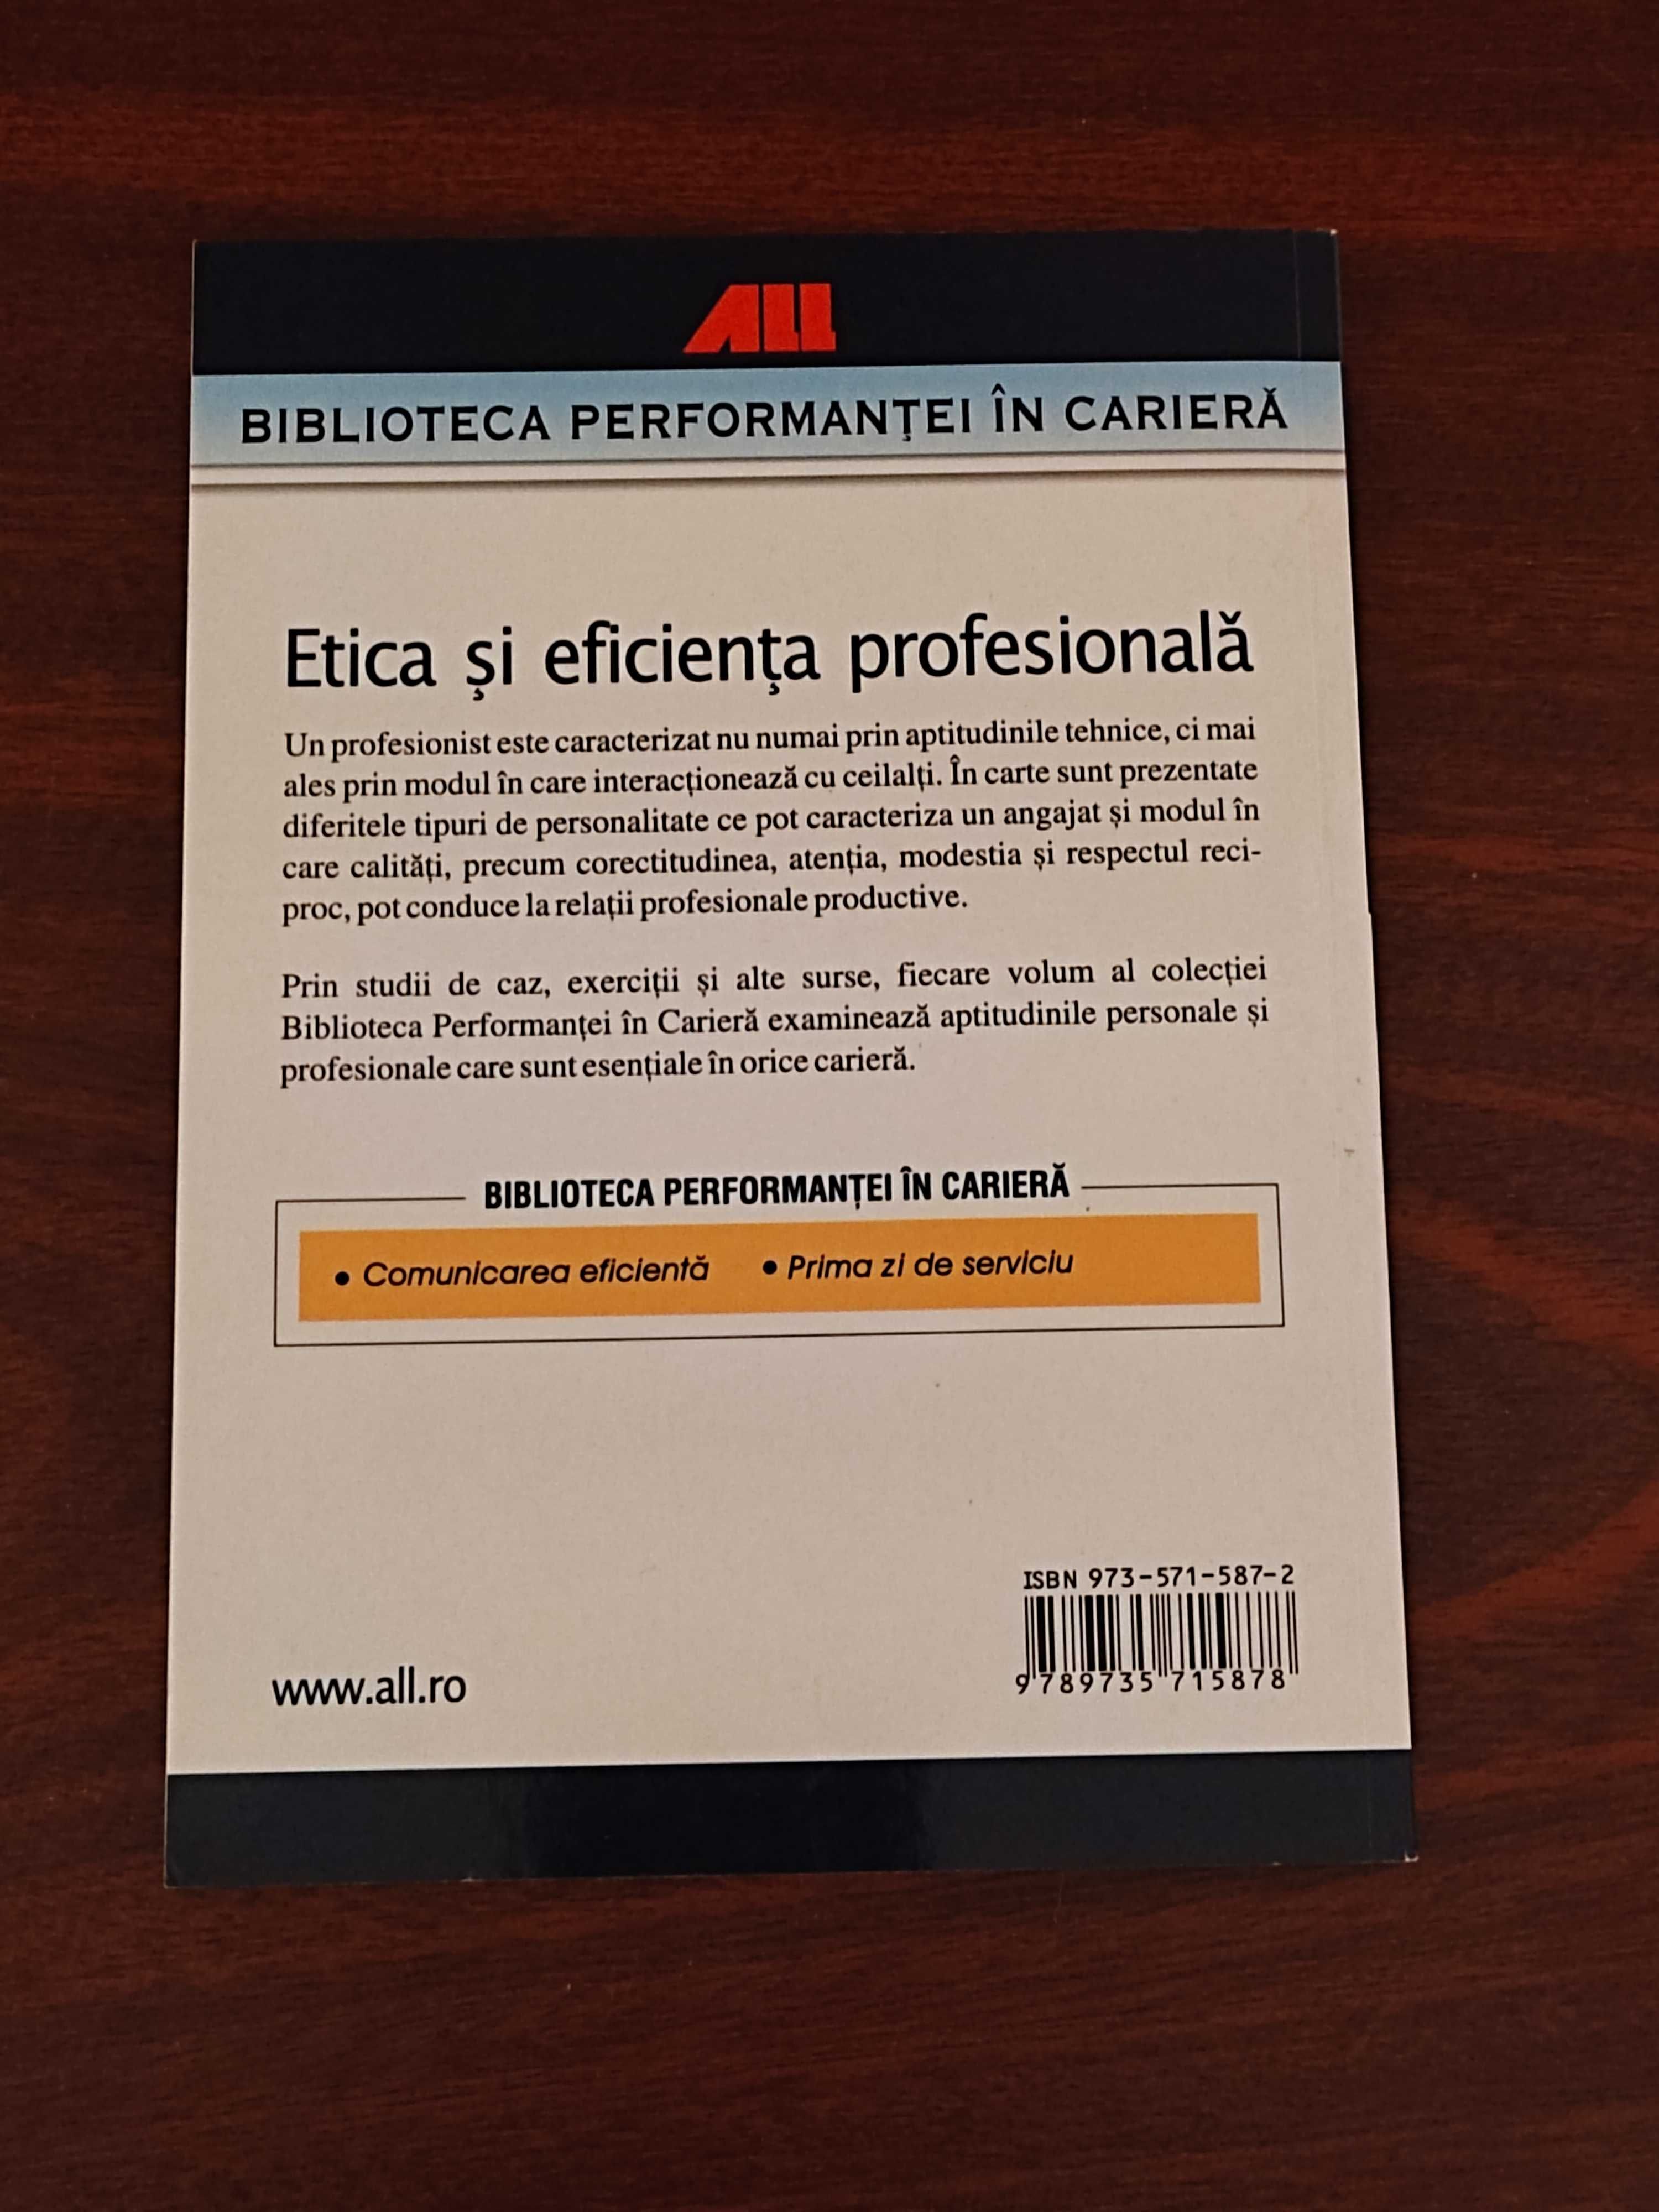 Etica și eficiența profesionala-Violeta Chiriac(trad.).Livrare gratis